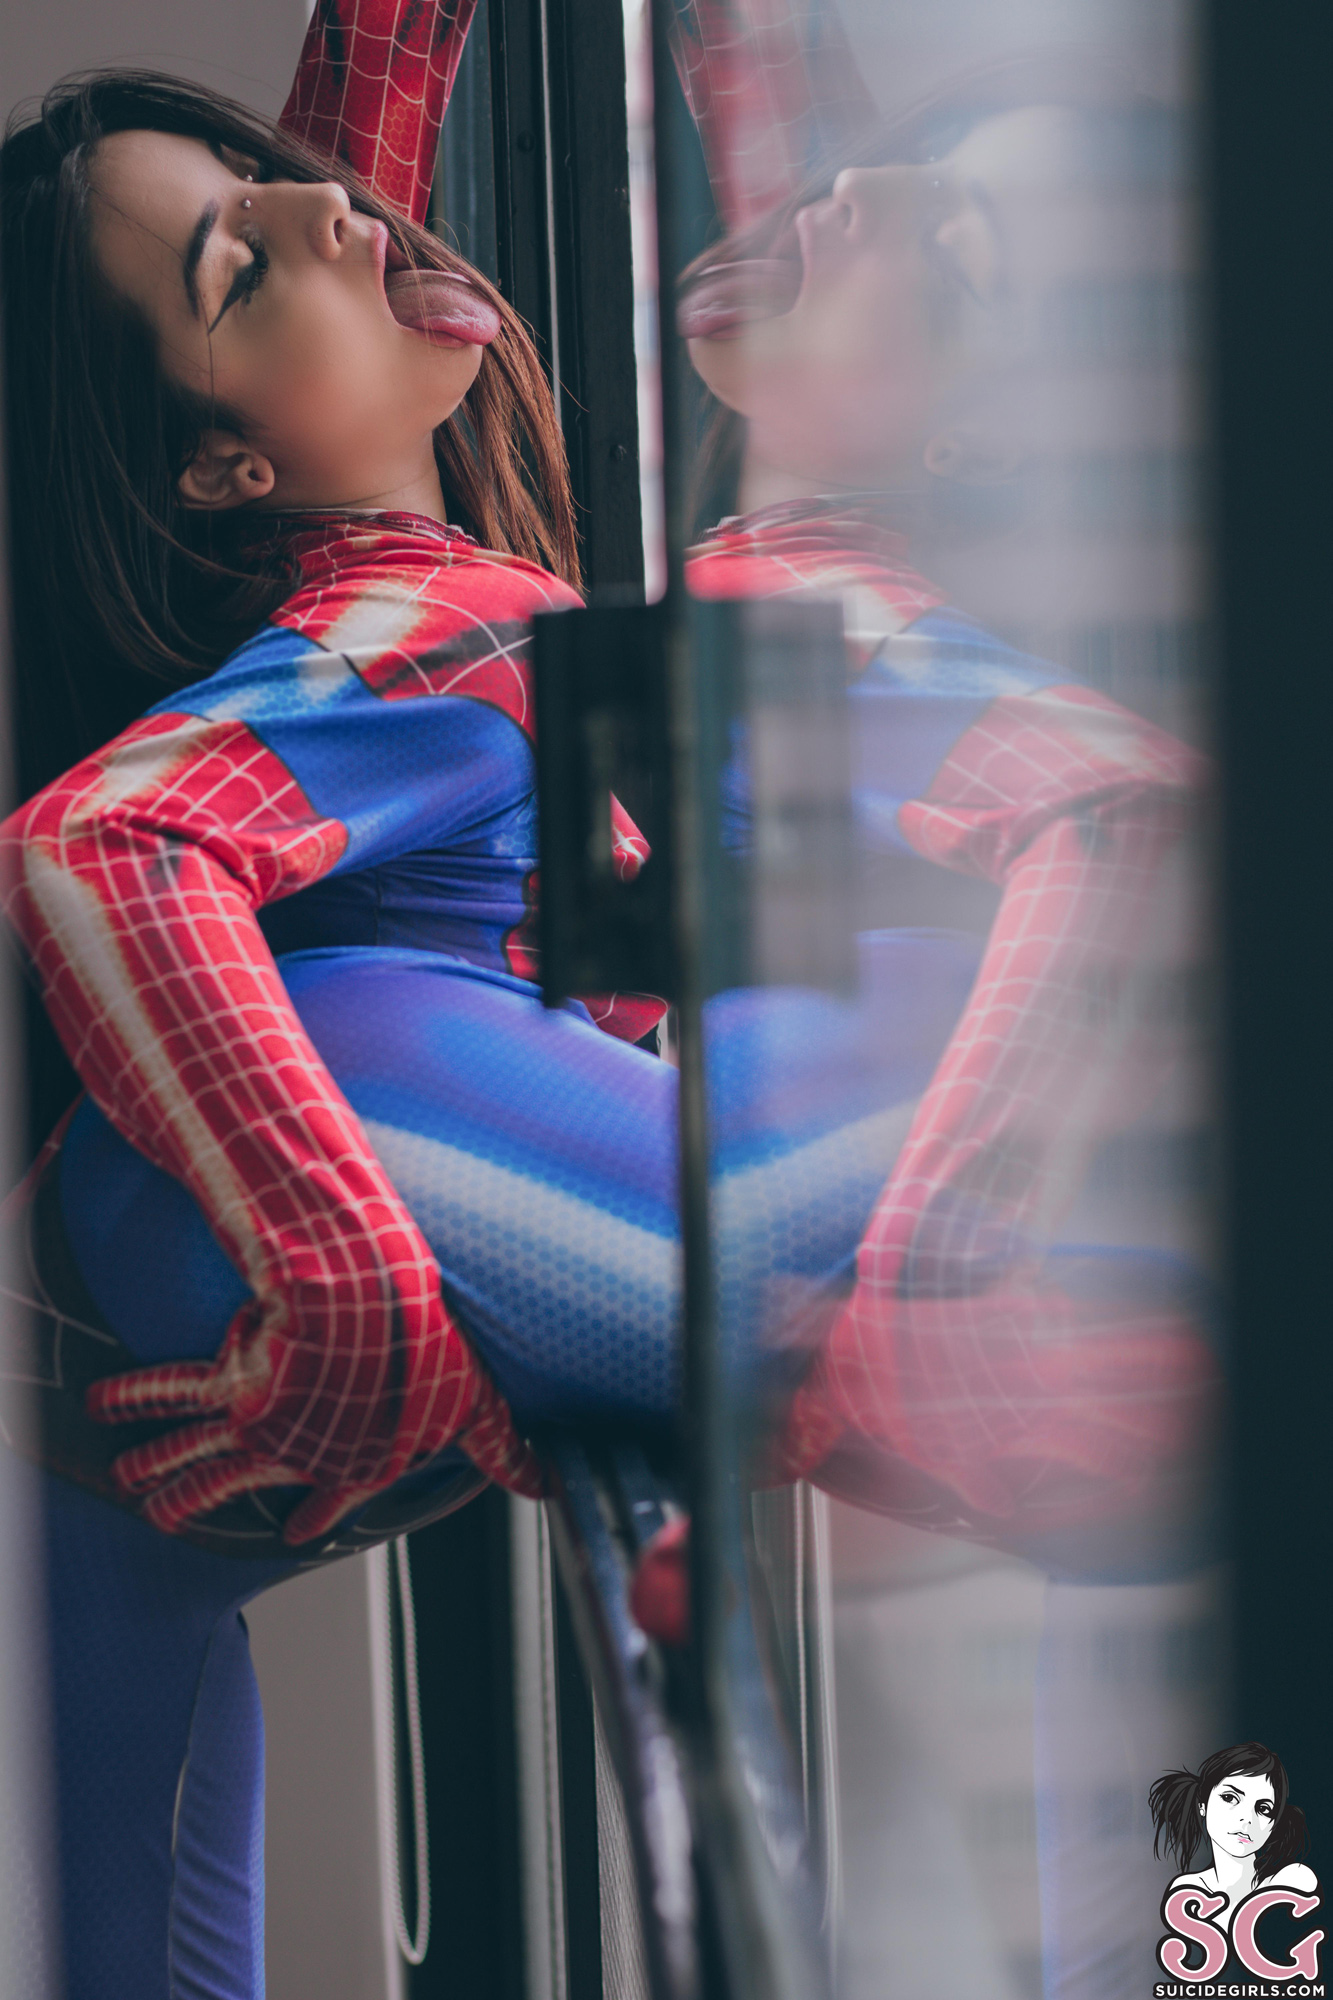 People 1333x2000 women model brunette long hair indoors Spider-Man cosplay window frames piercing Deskicio suicide portrait display watermarked